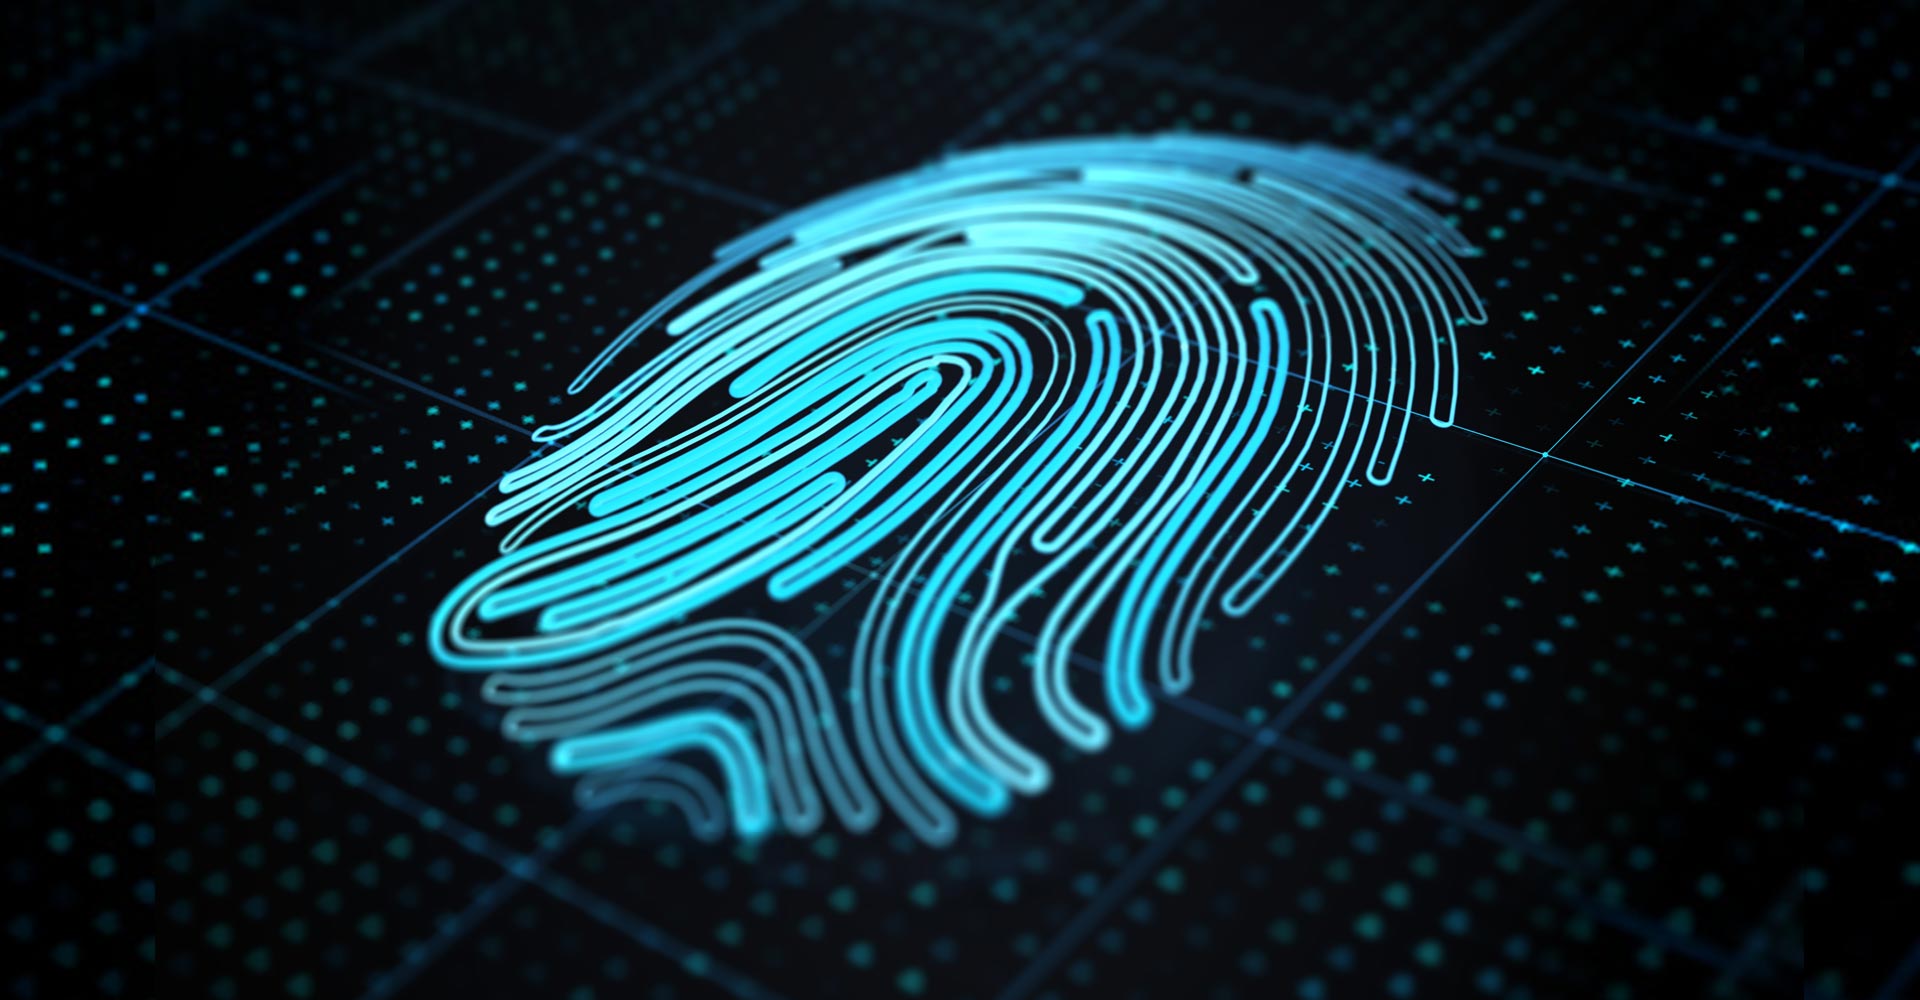 Are biometrics good or bad?